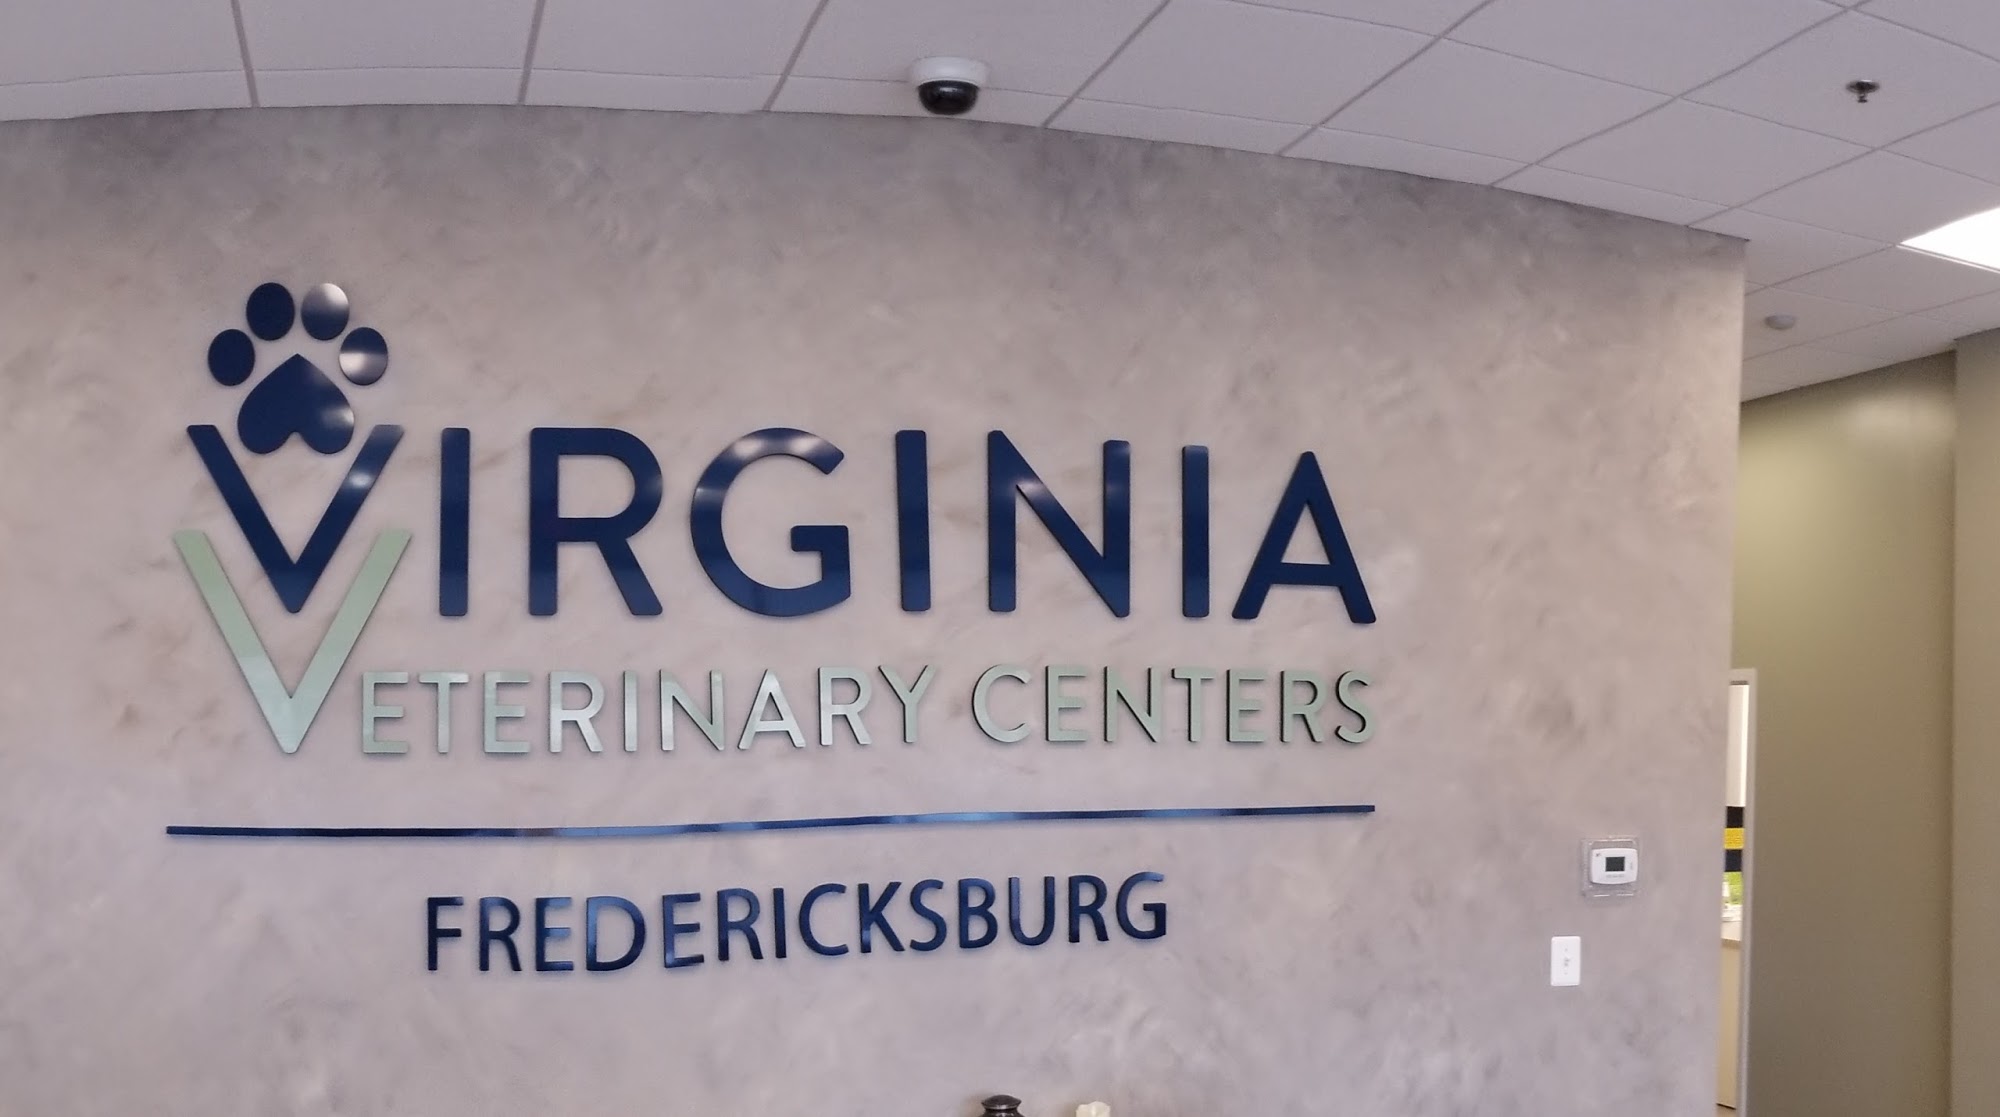 Virginia Veterinary Centers - Fredericksburg